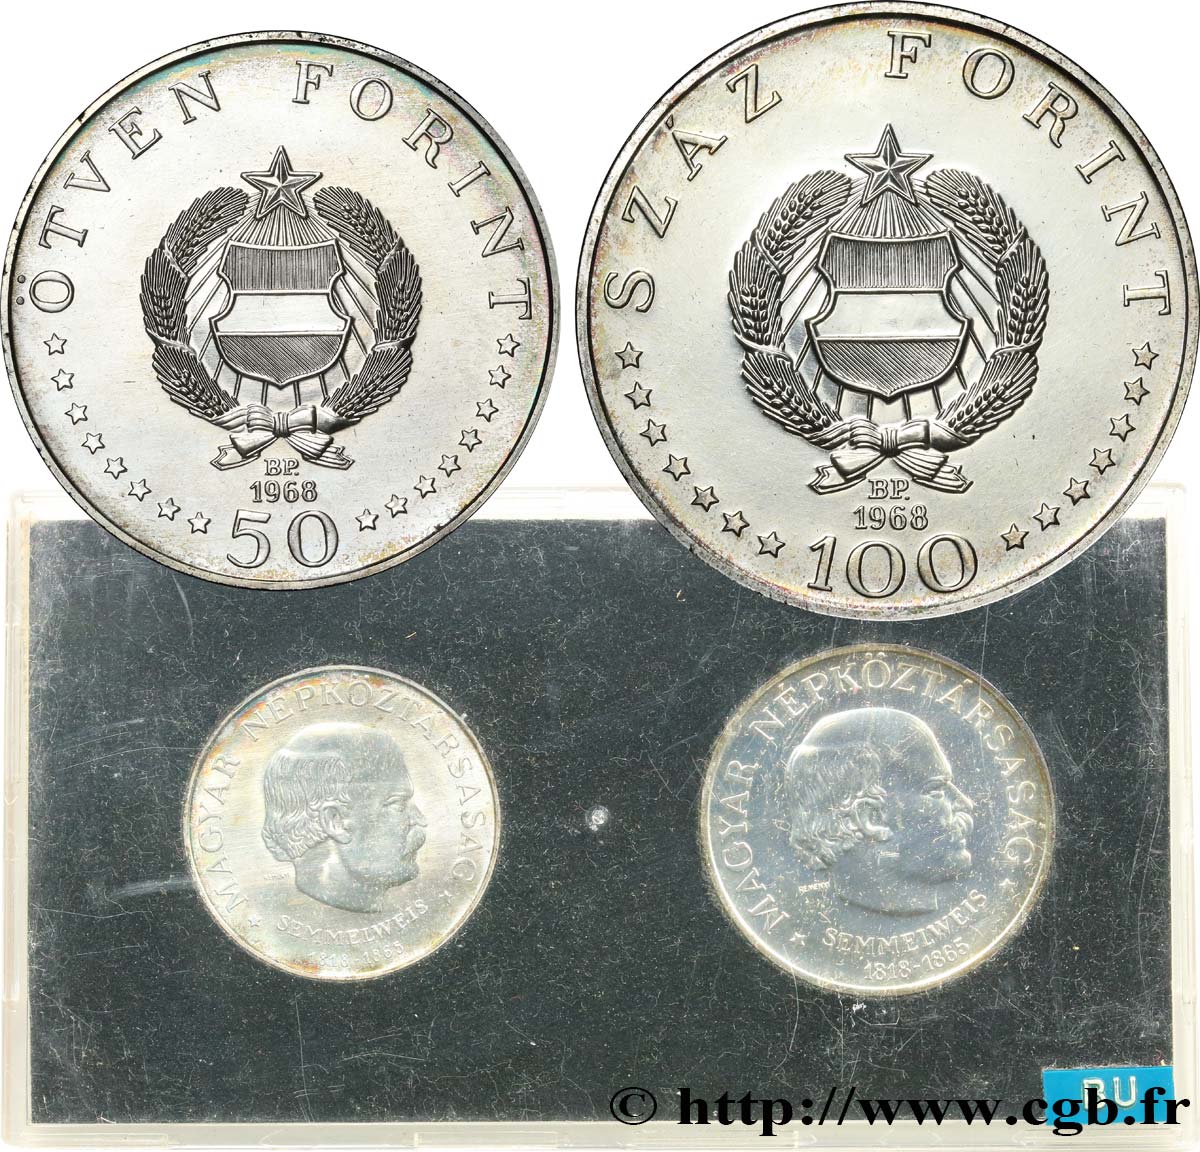 HONGRIE Série FDC - 2 monnaies - Ignác Semmelweis 1968 Budapest FDC 